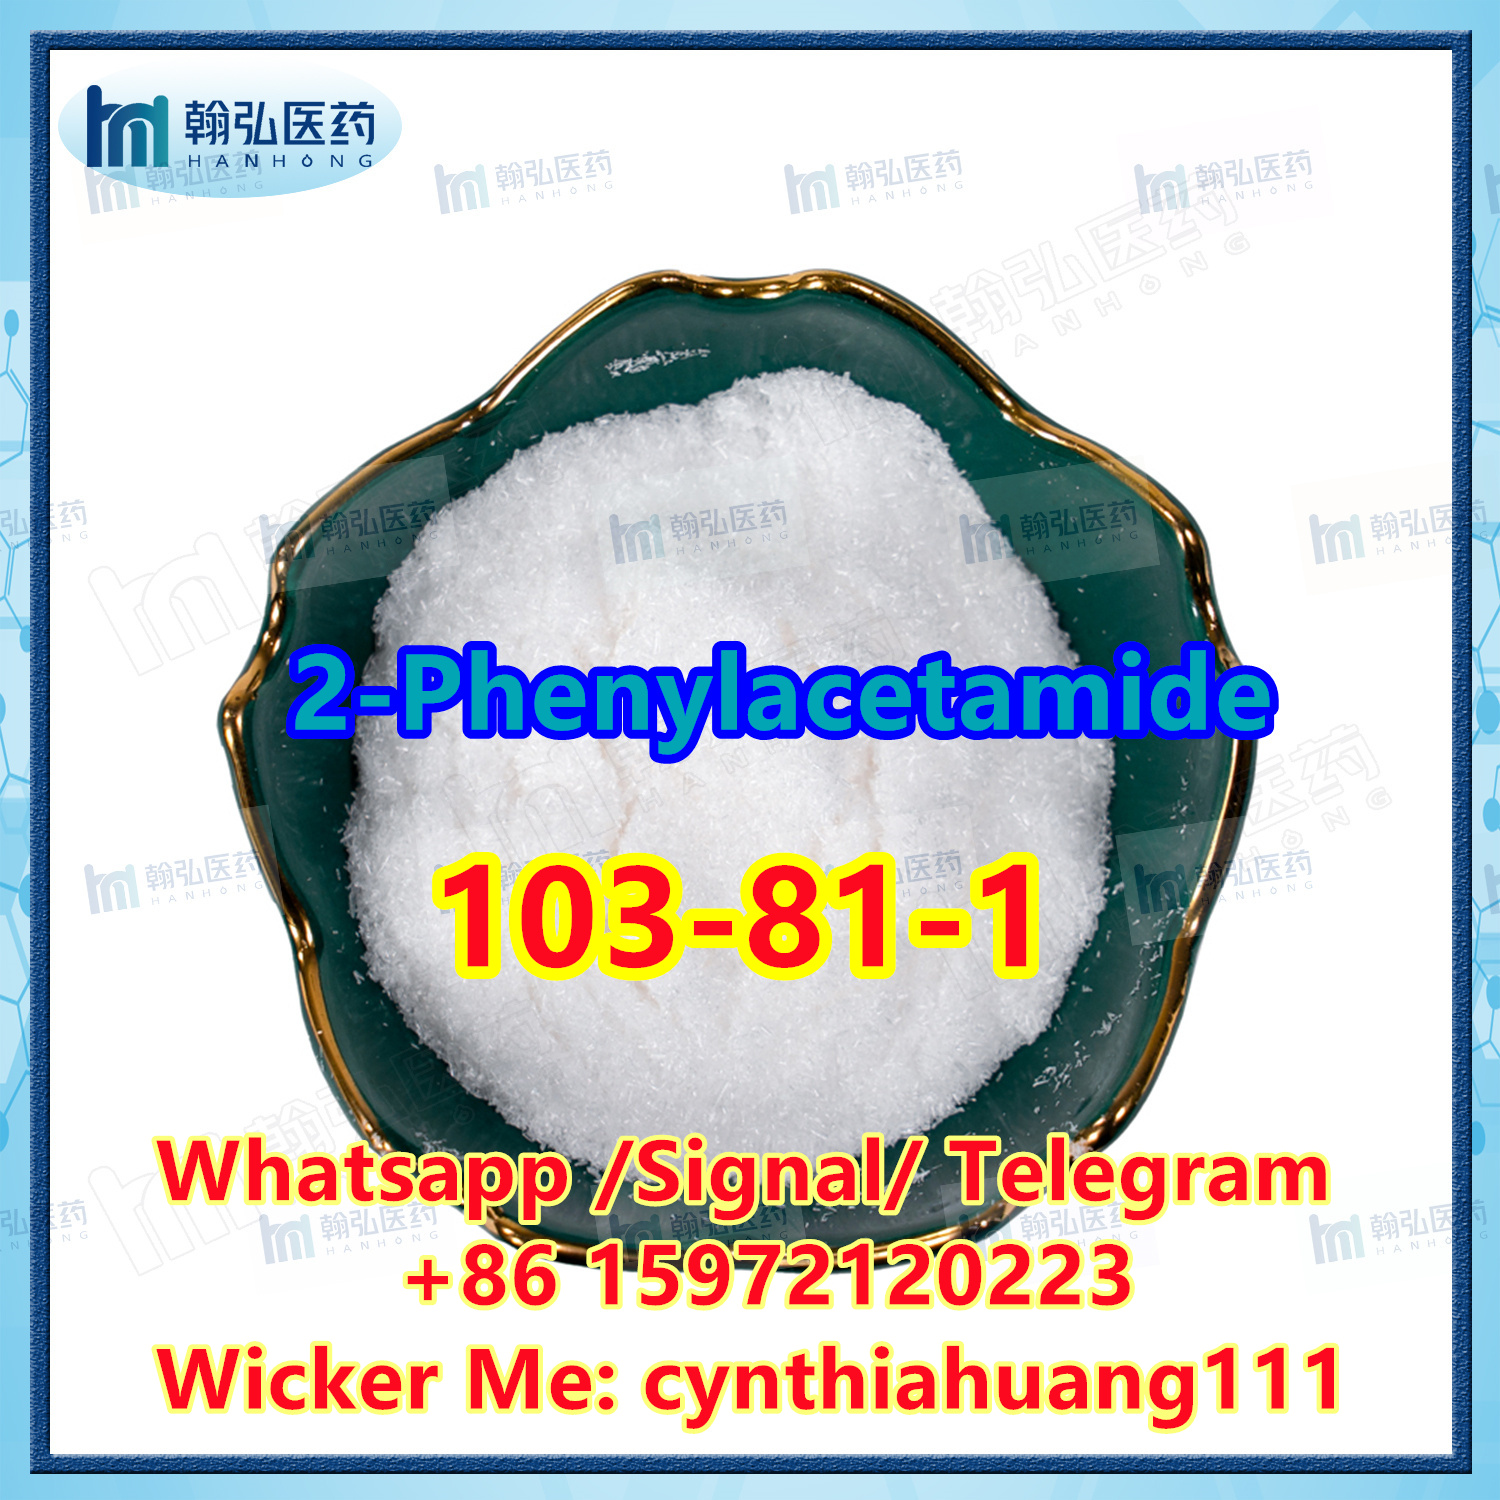 2-Phenylacetamide CAS 103-81-1 With Mexico Stock Whatsapp/Signal/Telegaram : +86 15972120223